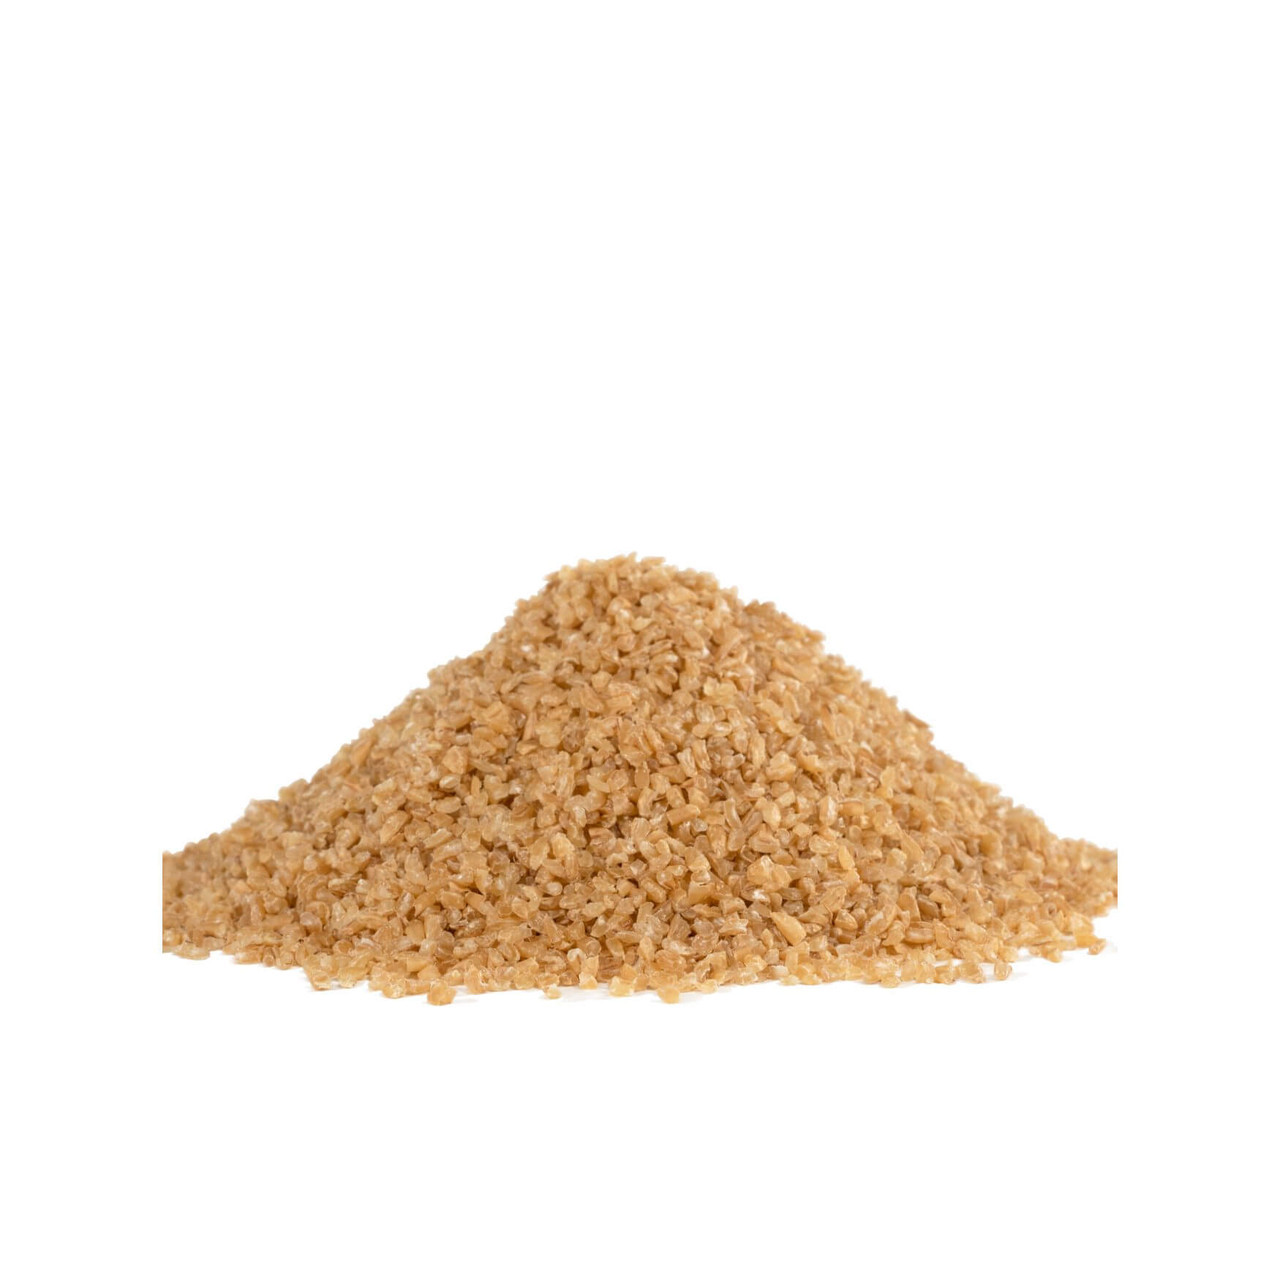 Bob's Red Mill 25 lbs. (11.34 kg) Golden Bulgur Wheat (60 BAGS/PALLET) - Chicken Pieces